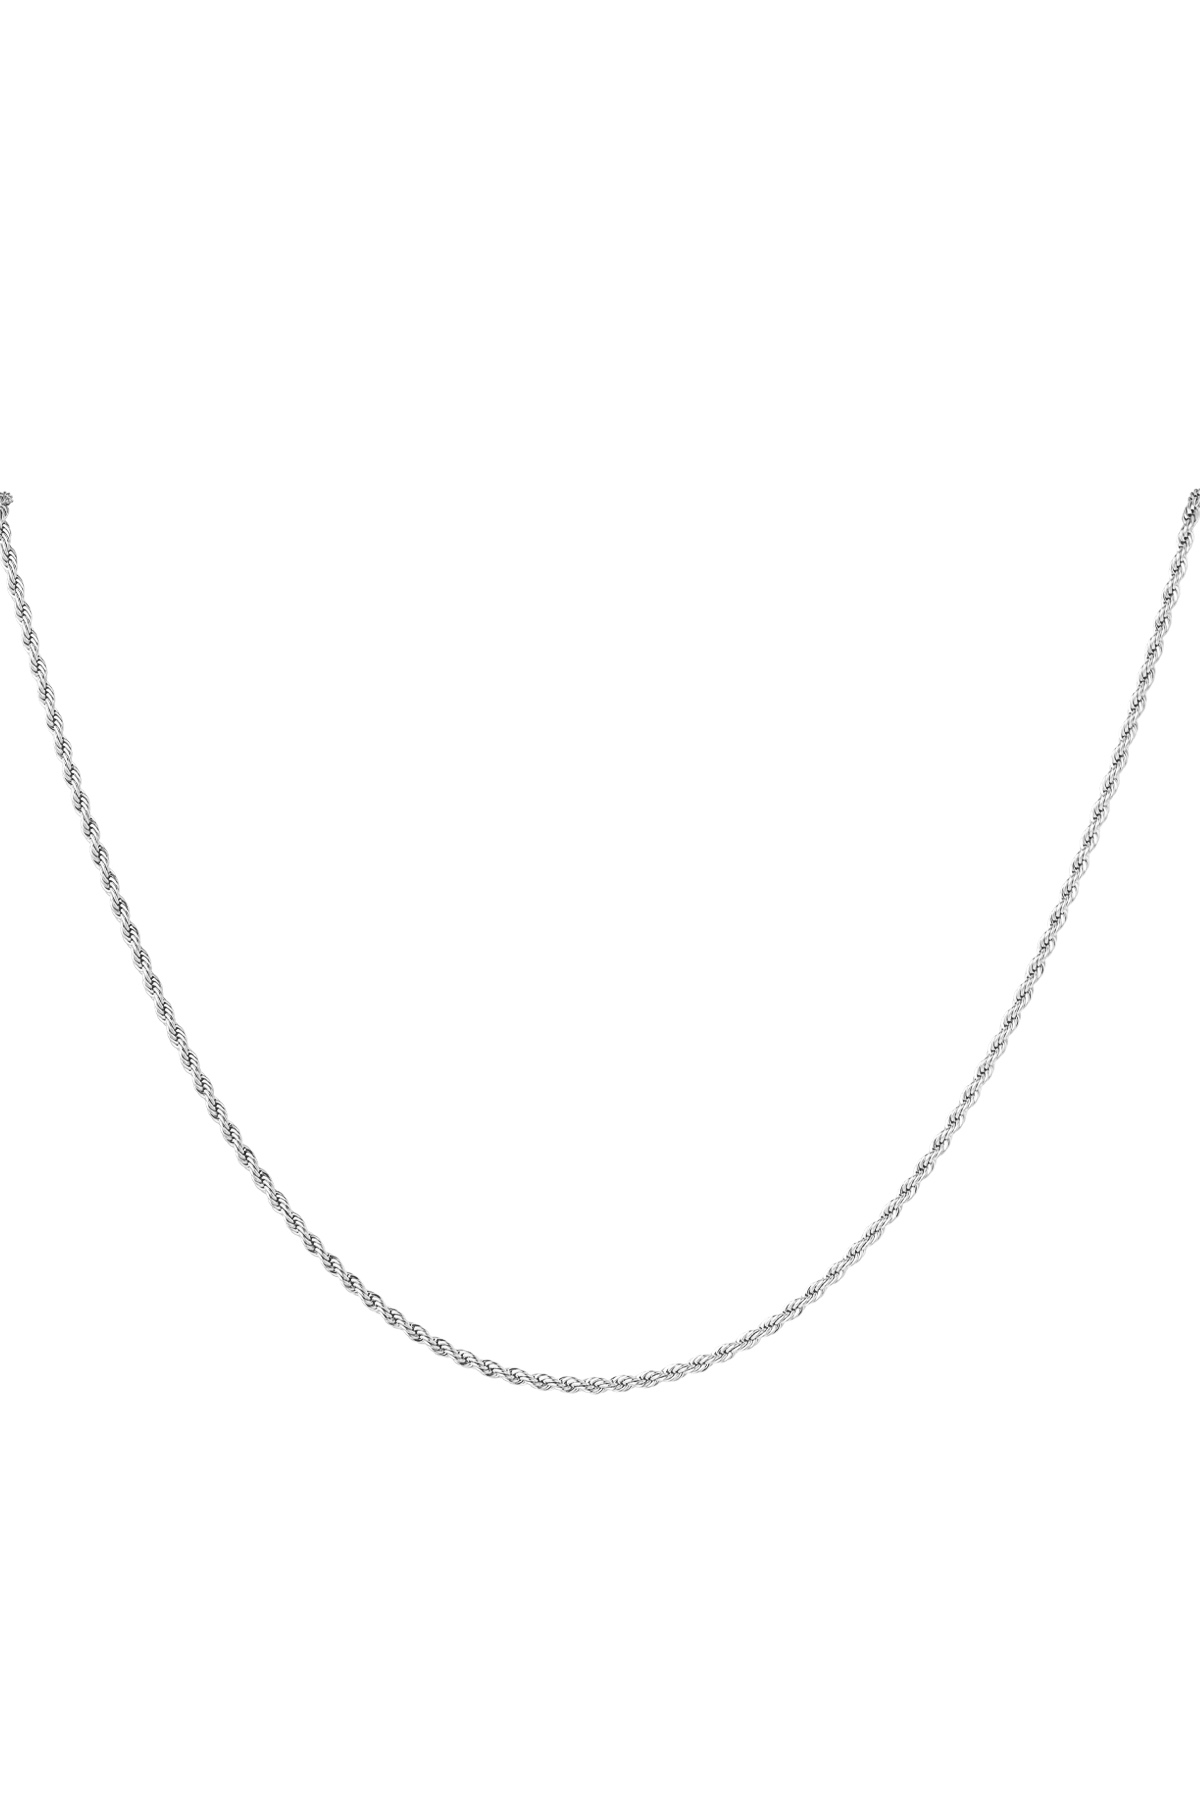 Halskette gedreht lang - Silber - 2,0MM